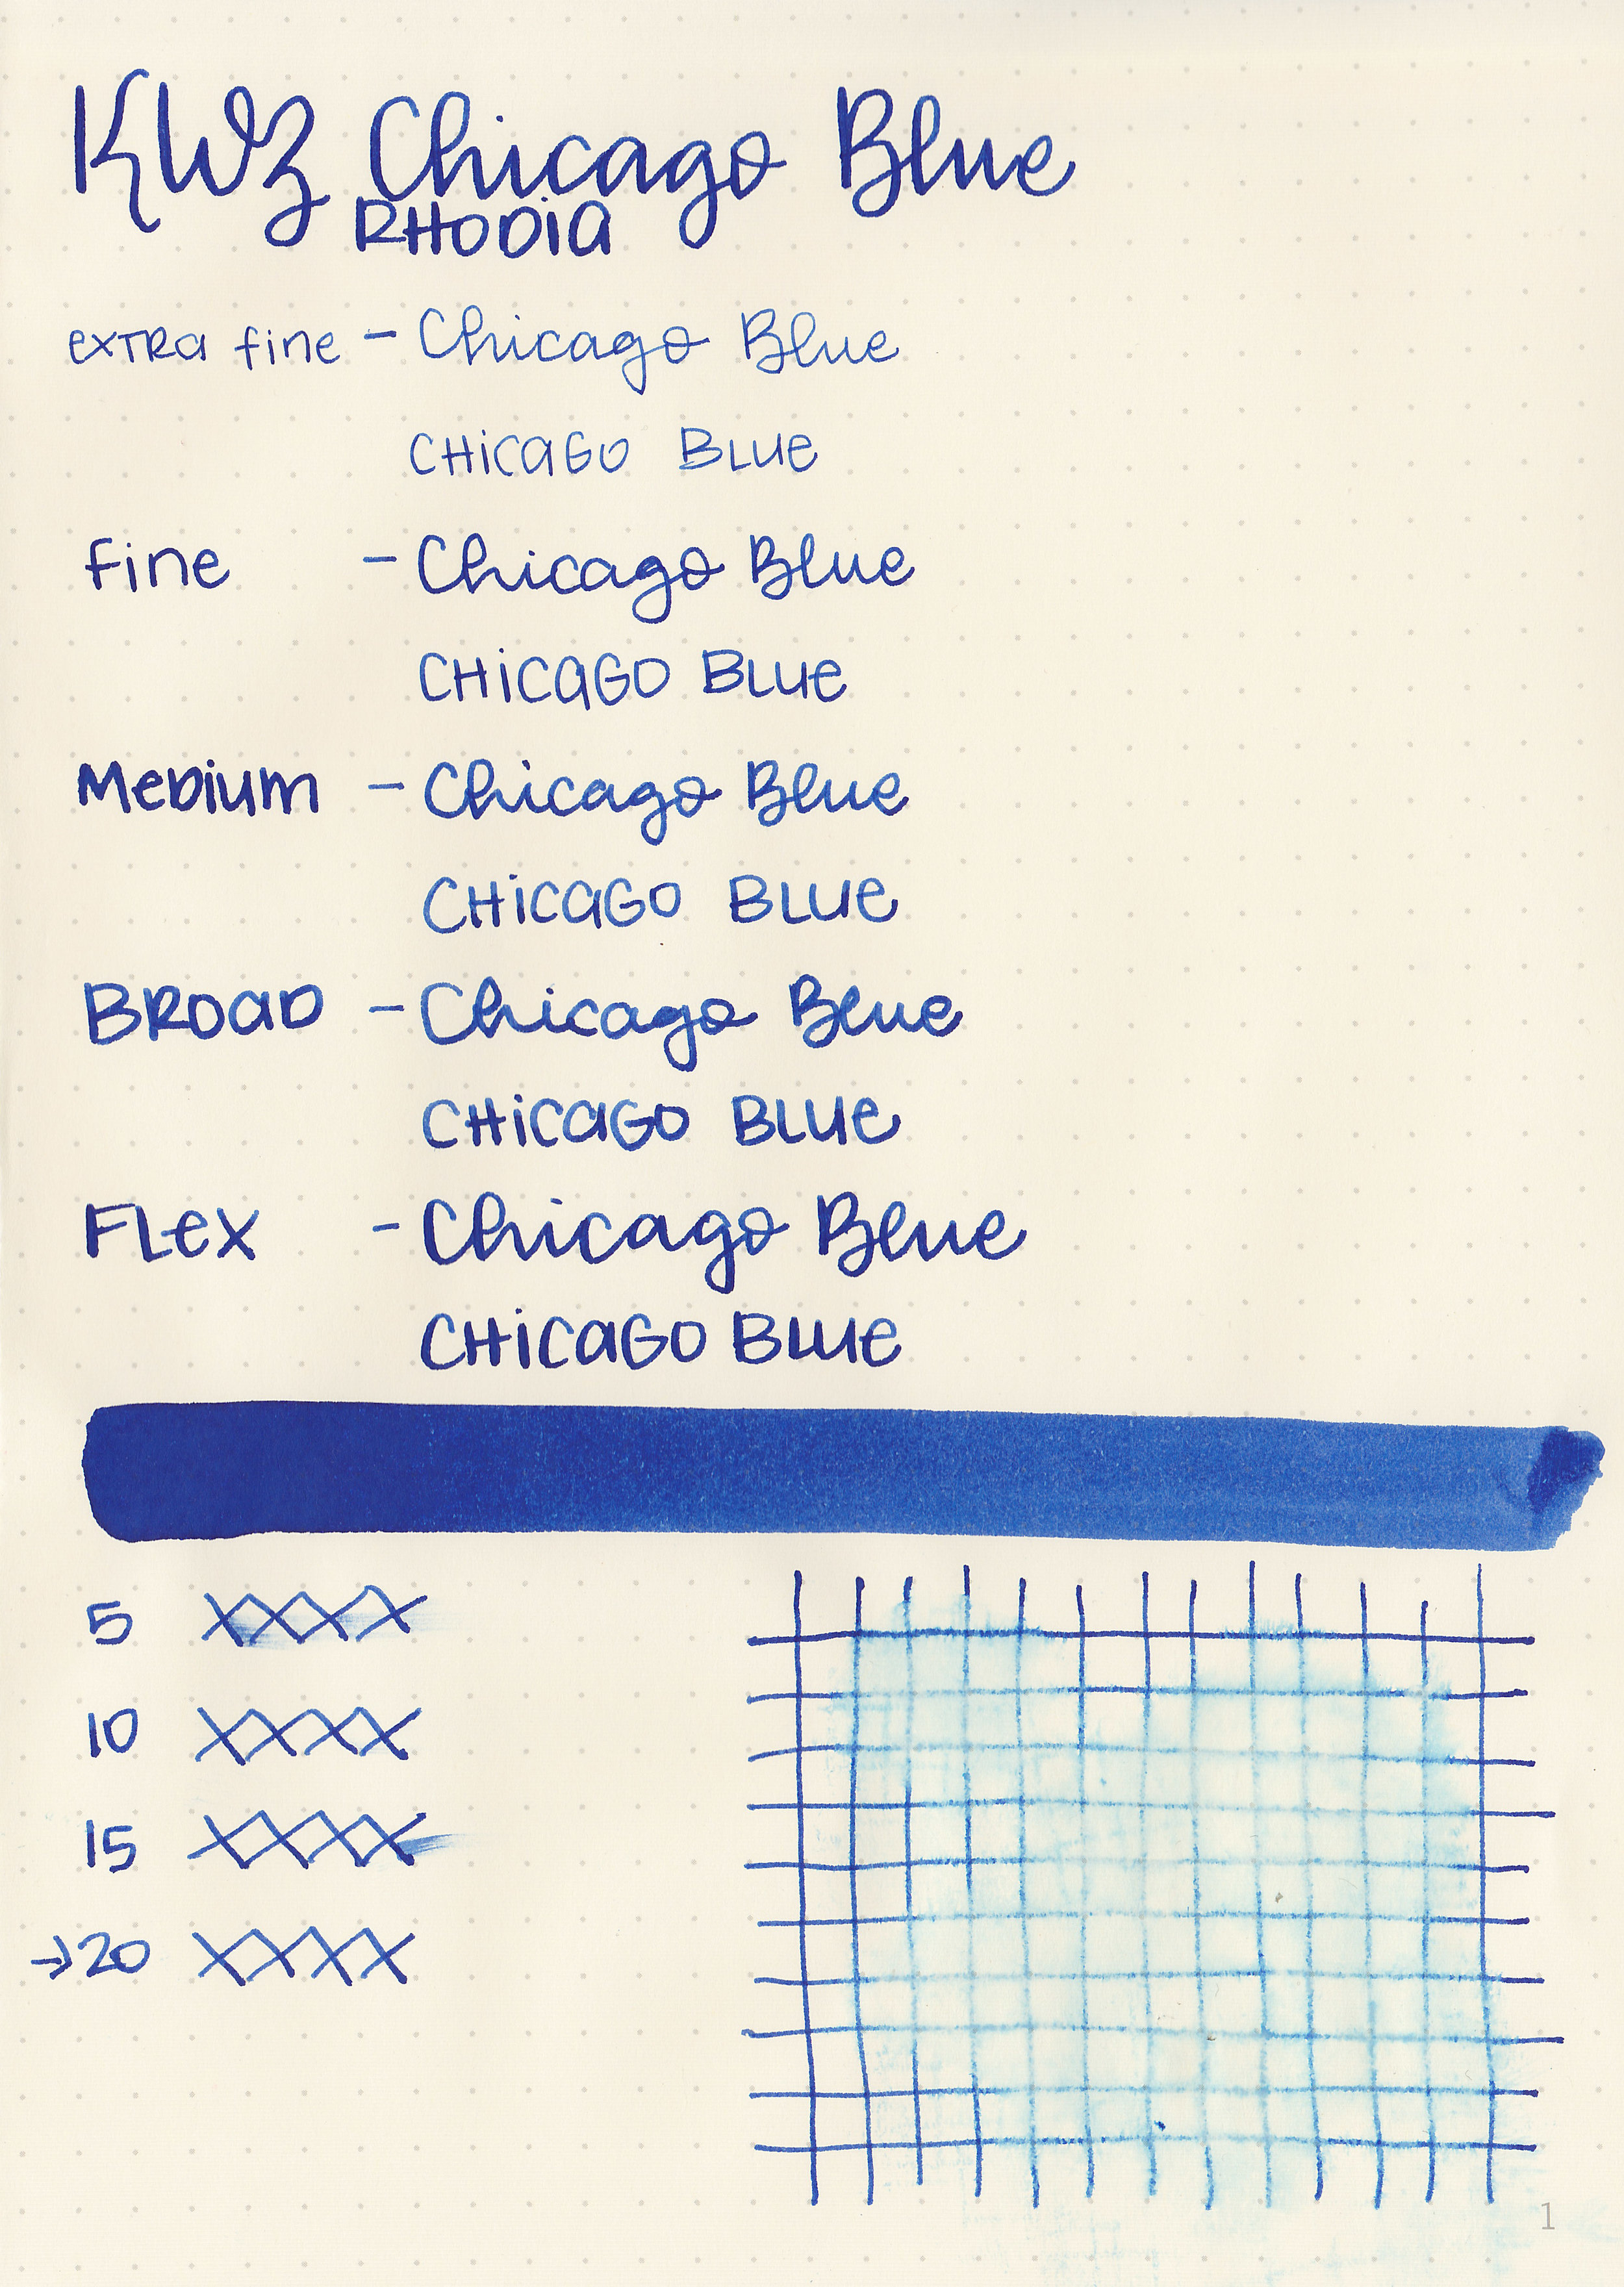 kwz-chicago-blue-5.jpg